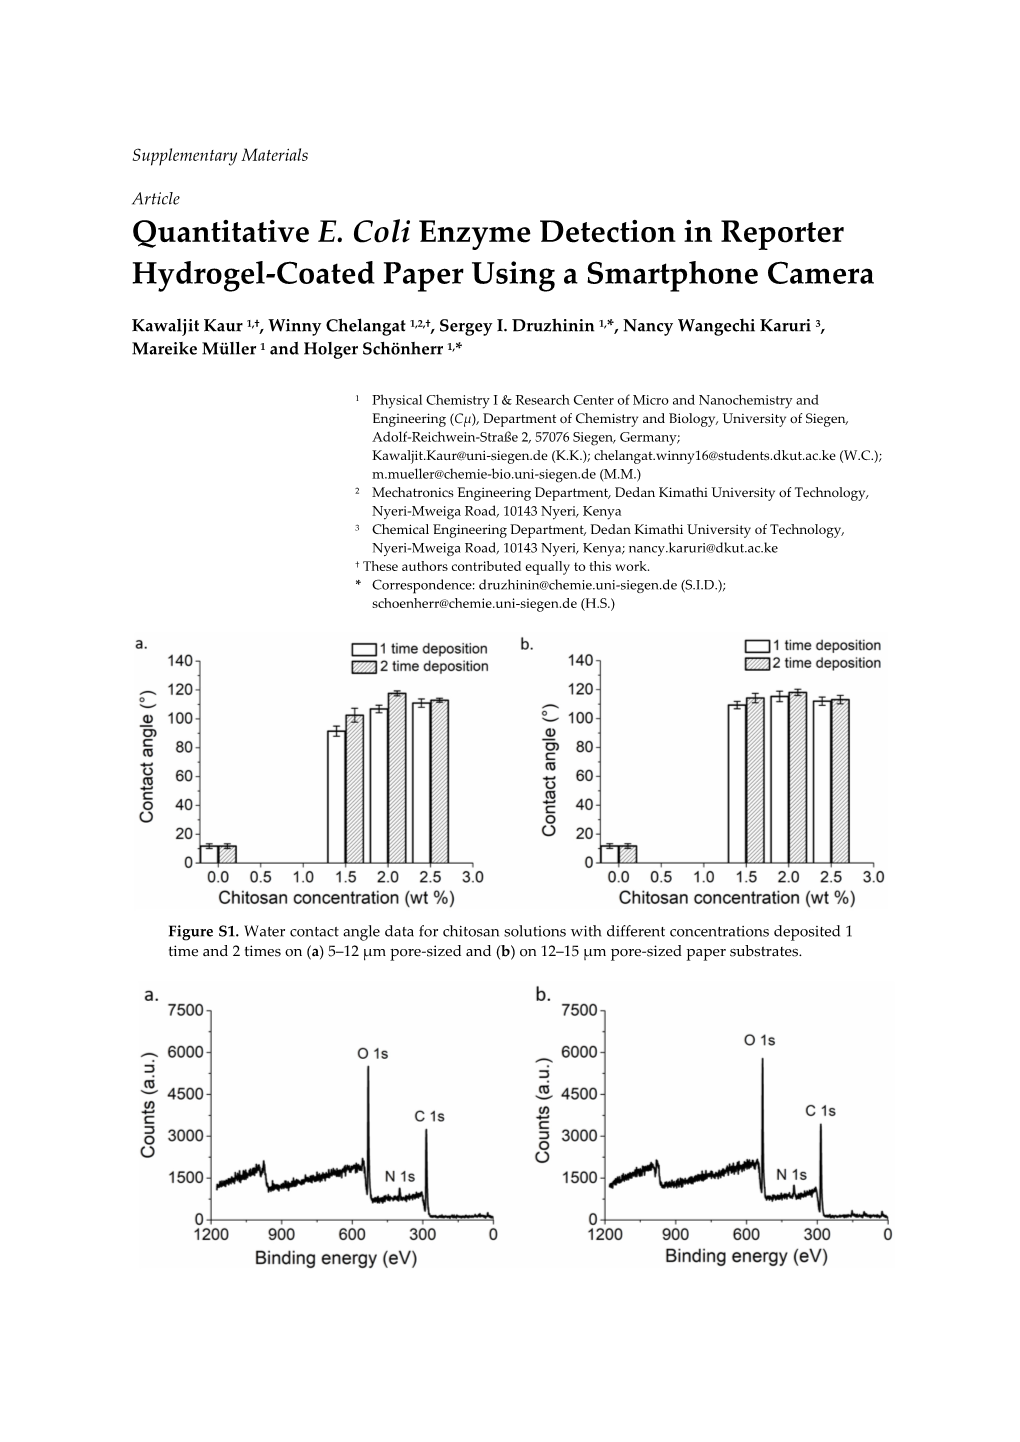 Quantitative E. Coli Enzyme Detection in Reporter Hydrogel-Coated Paper